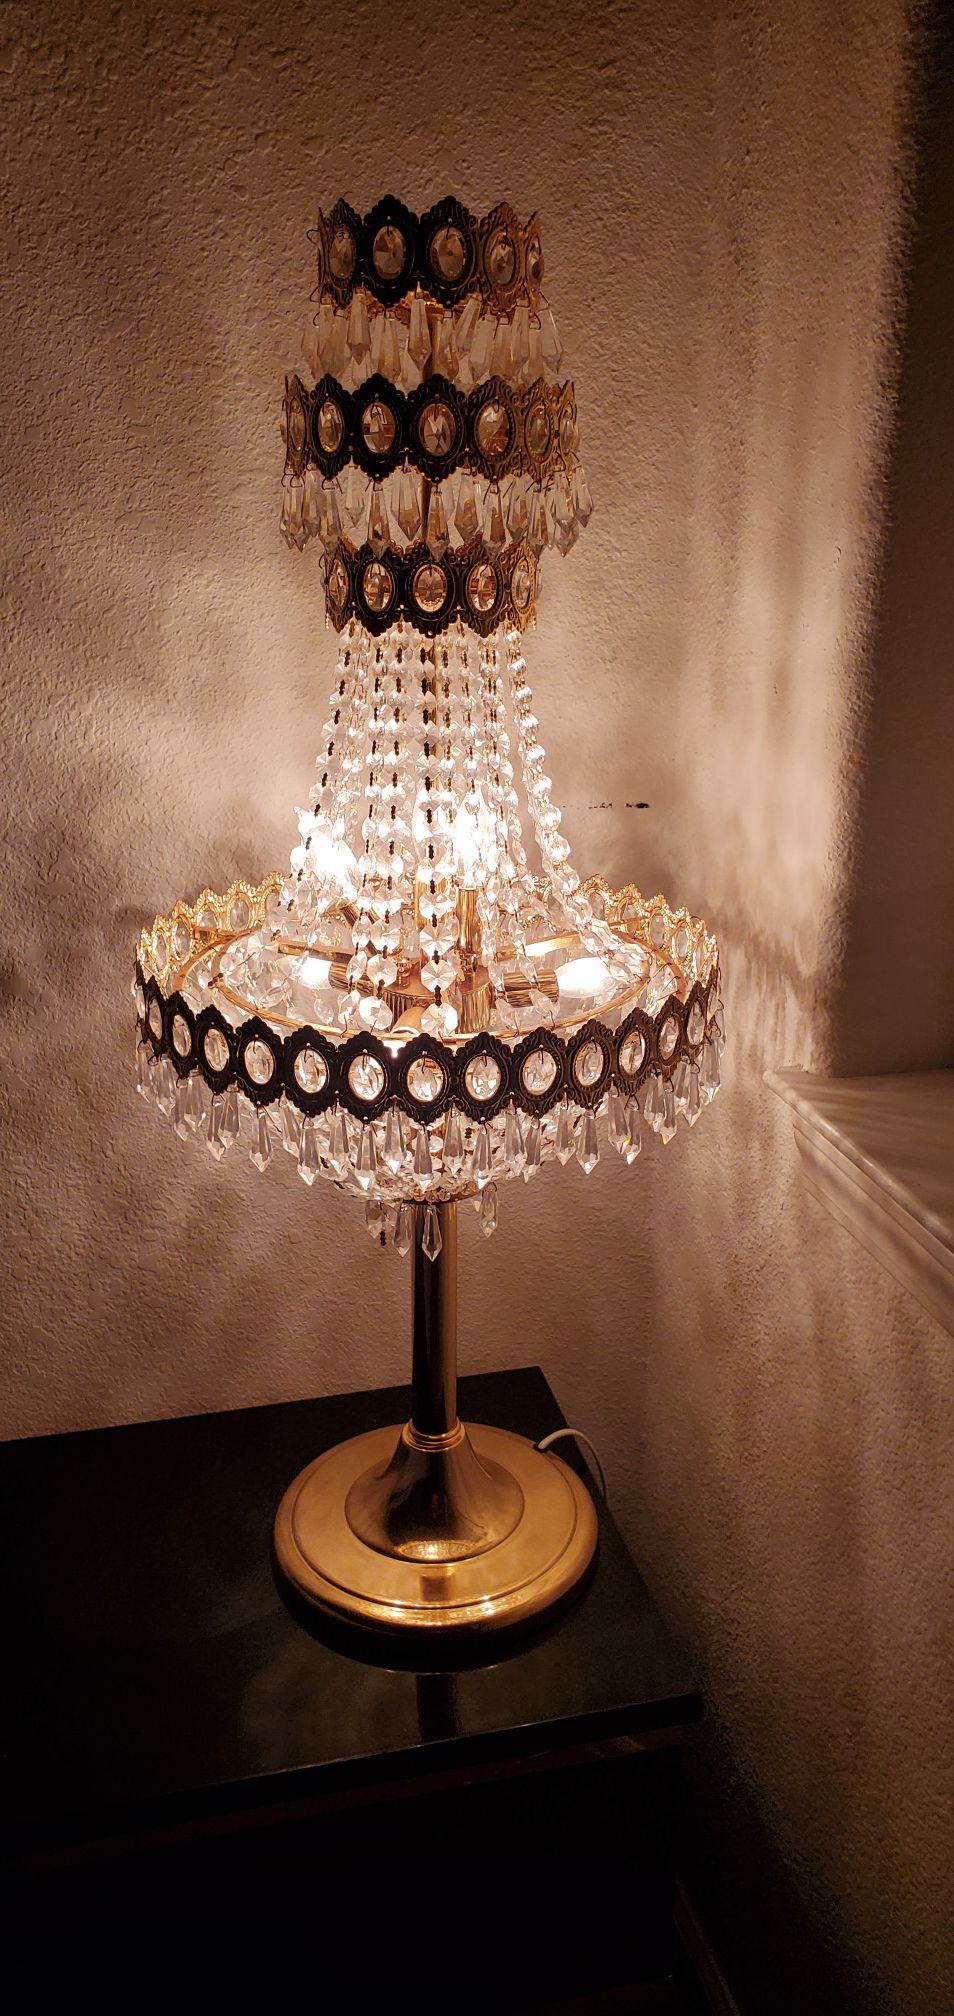 Chandelier table lamp